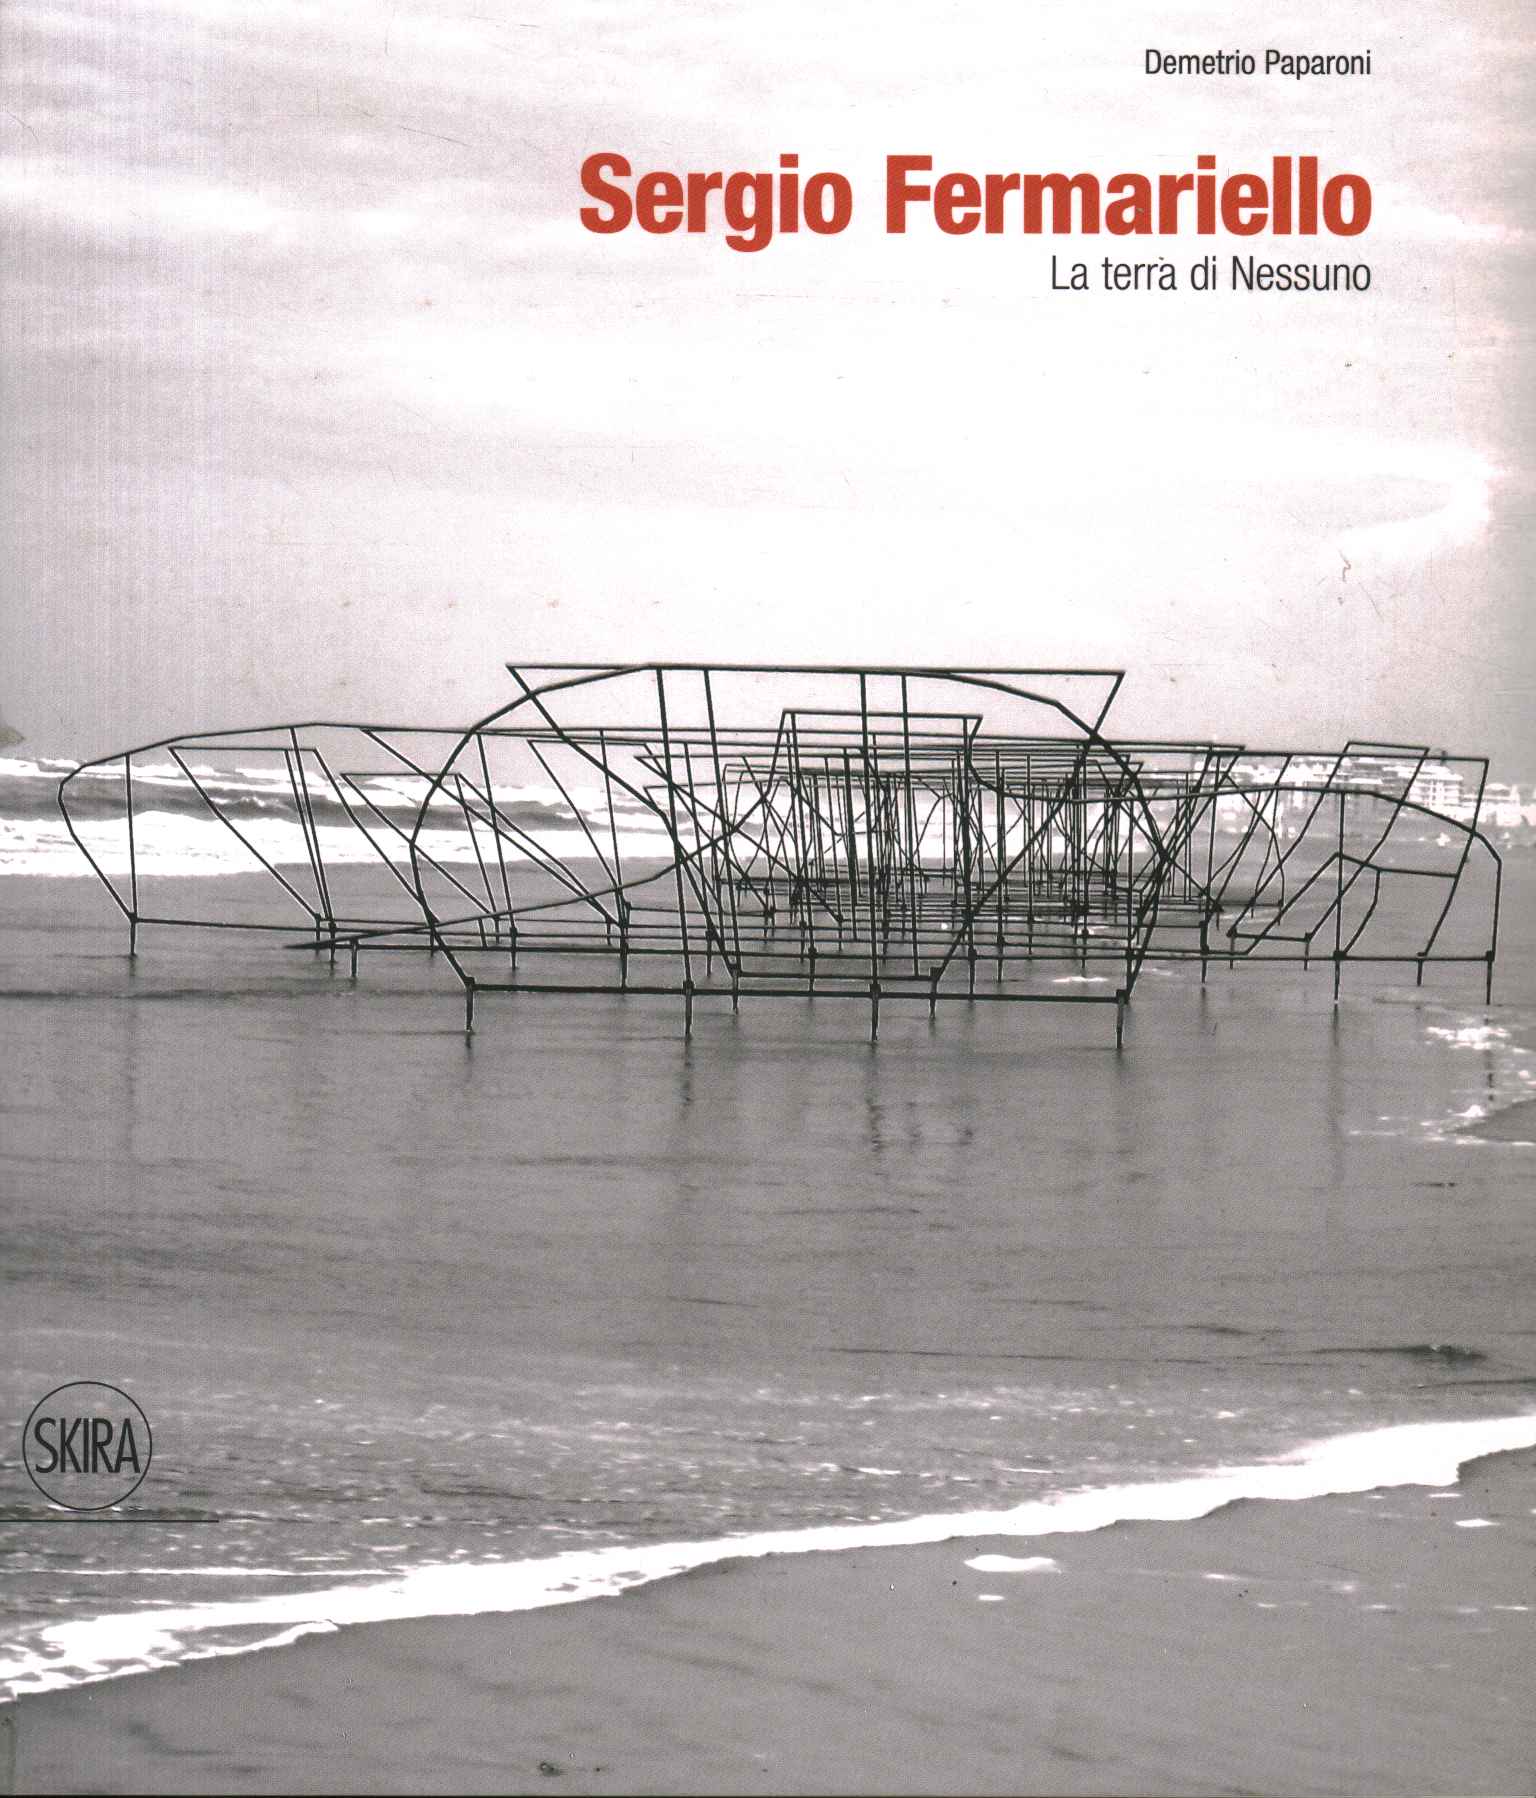 Sergio Fermariello. No man's land